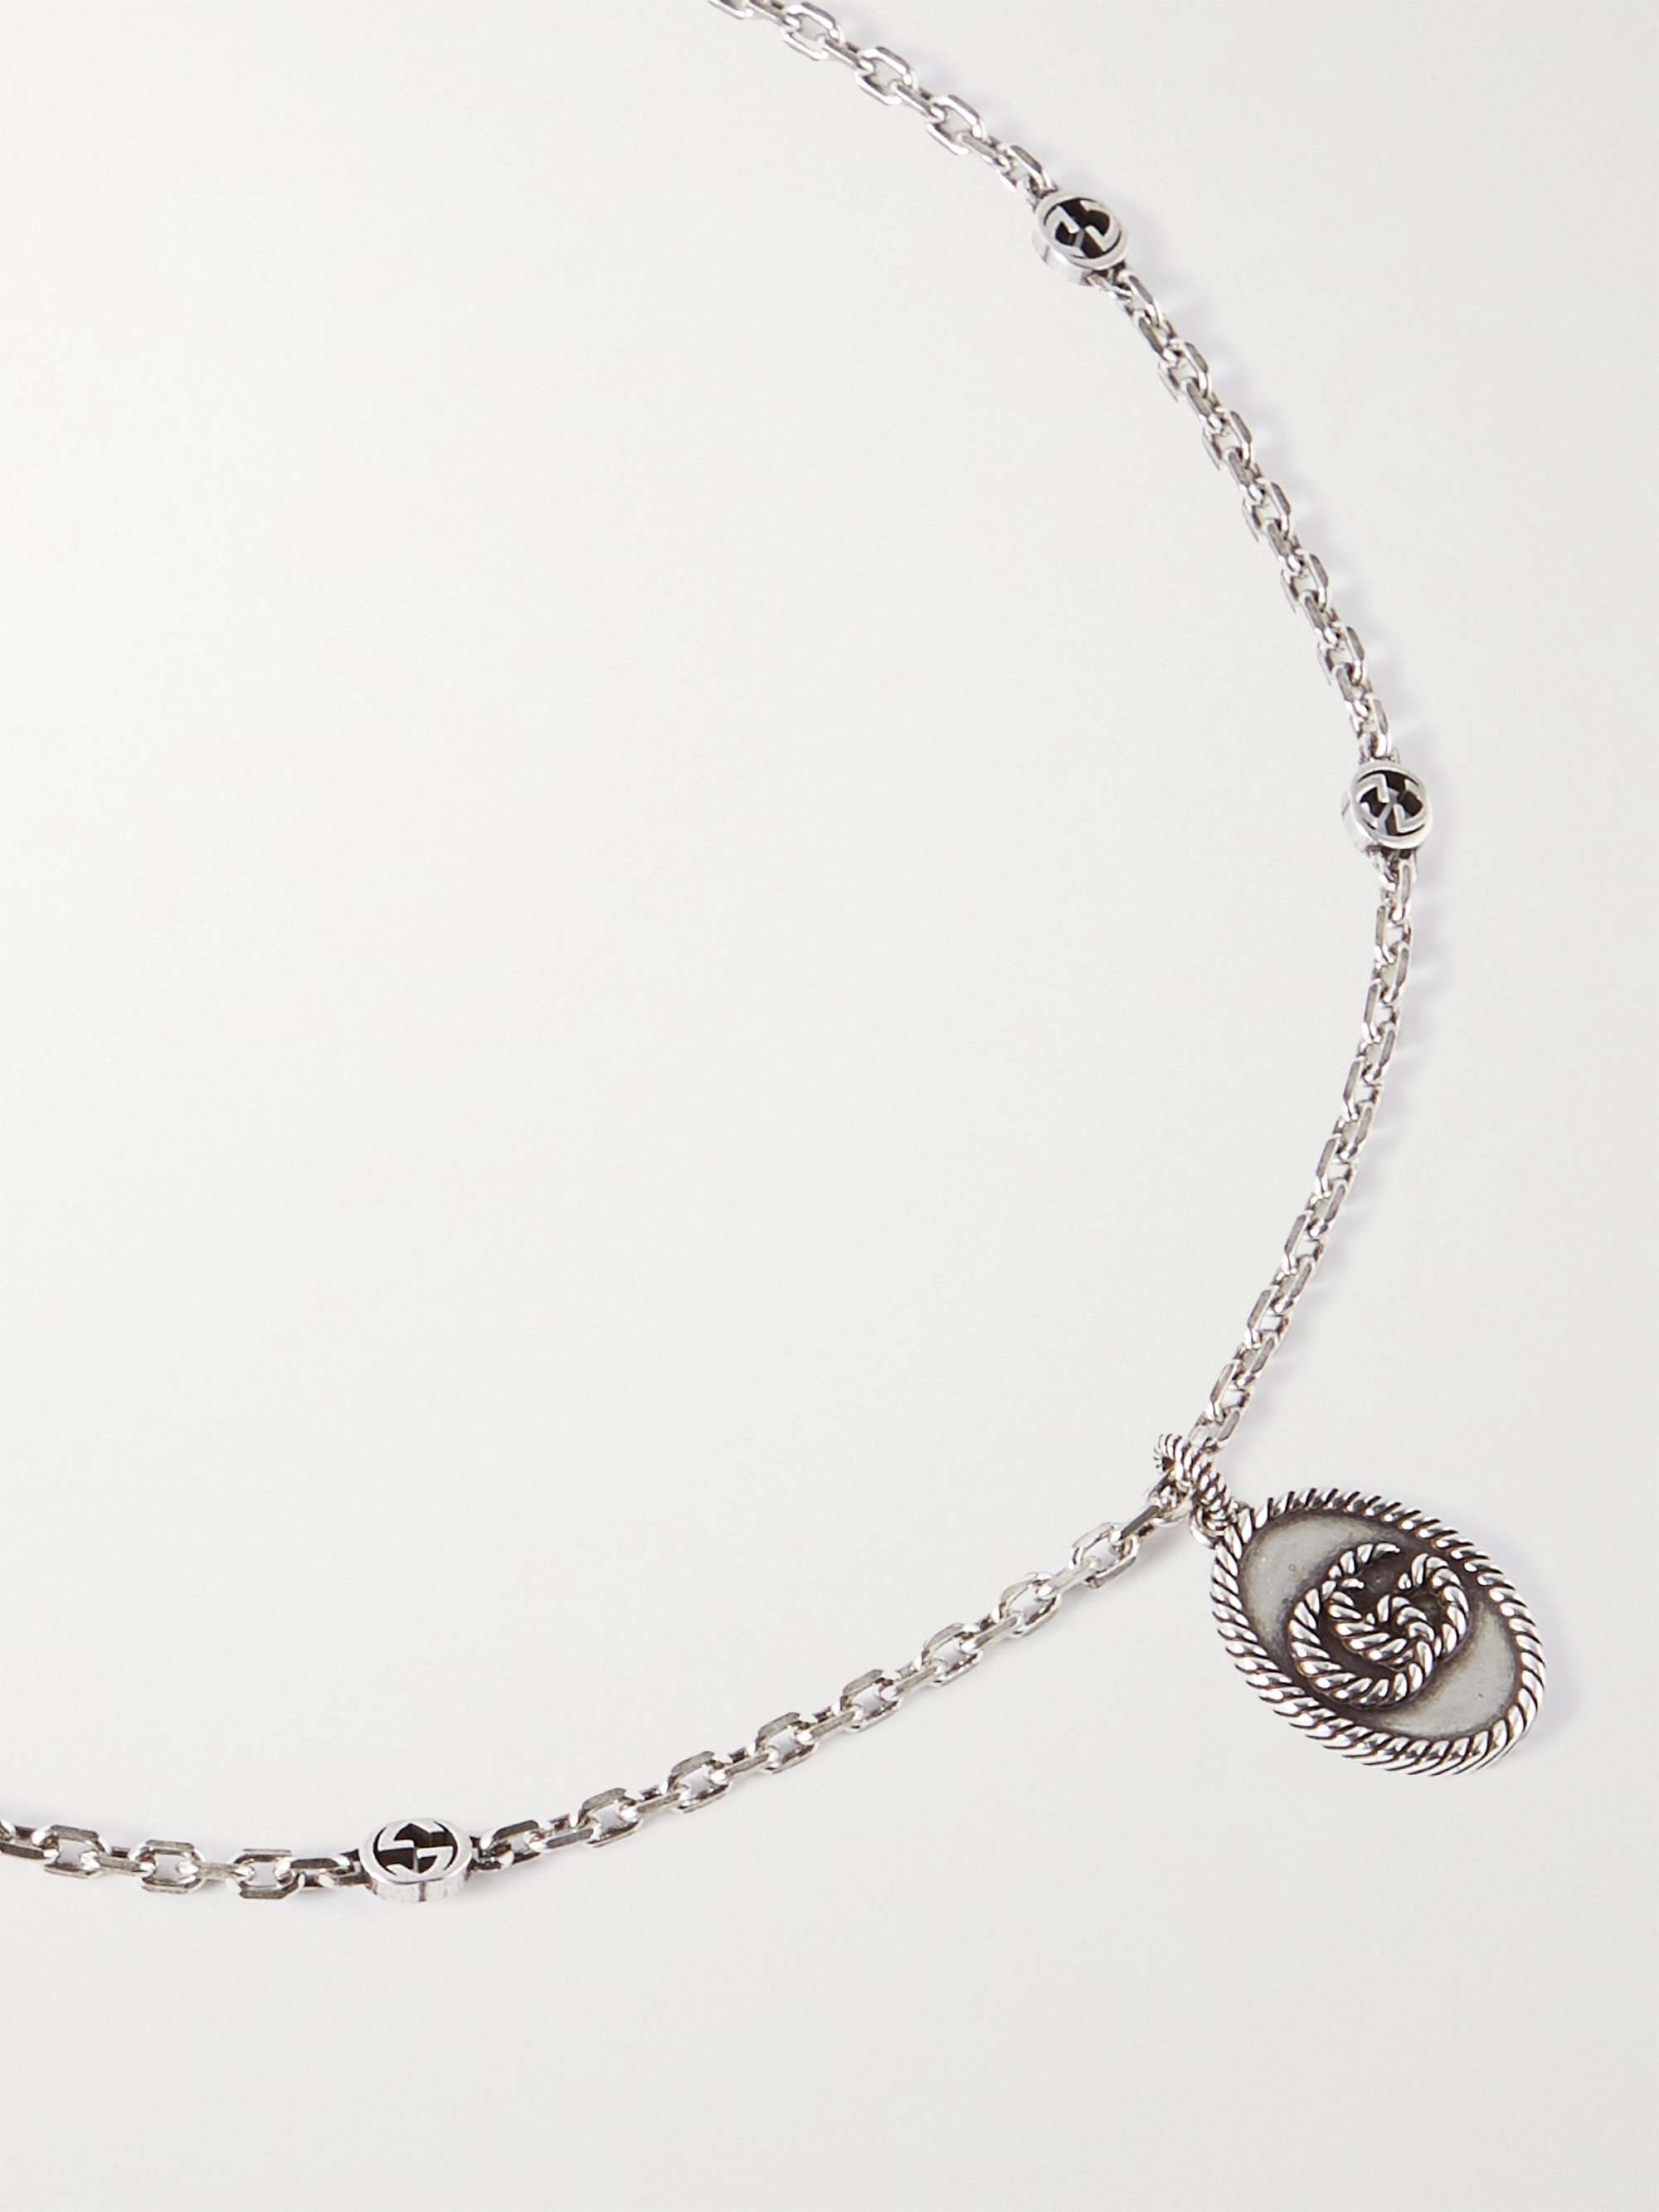 Burnished Sterling Silver Pendant Necklace